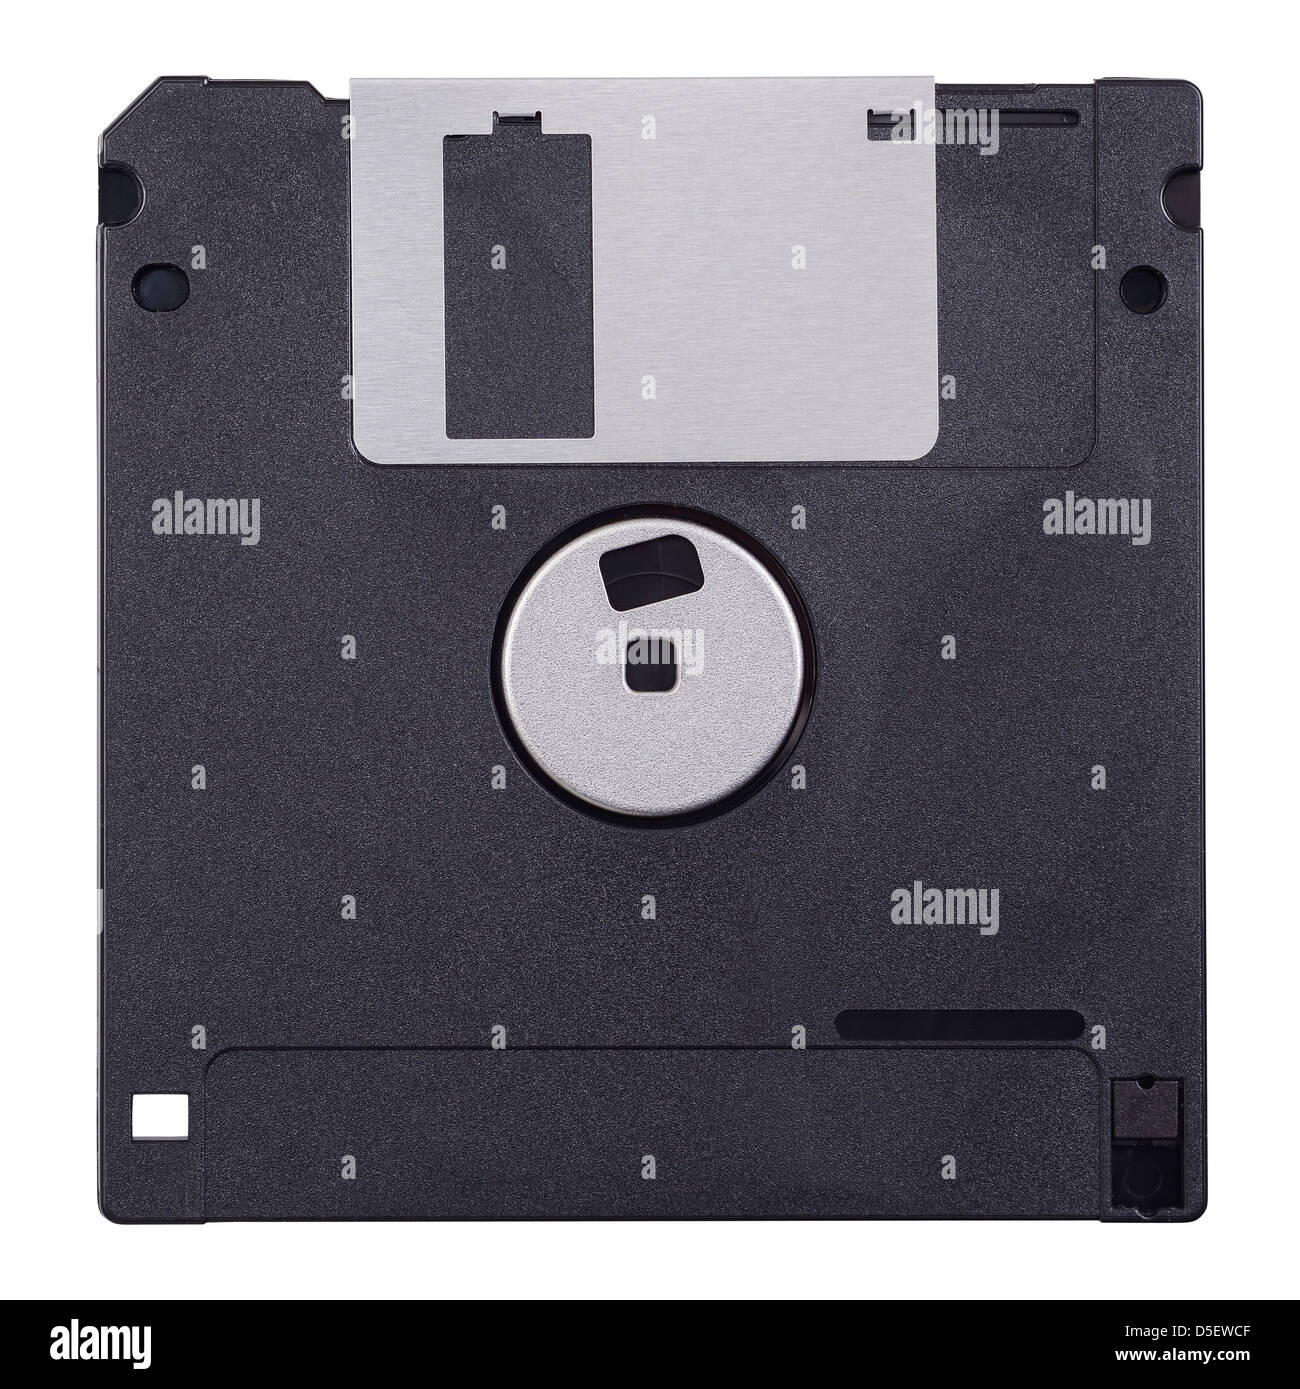 Computer floppy disc 3 1/2 inch Stock Photo